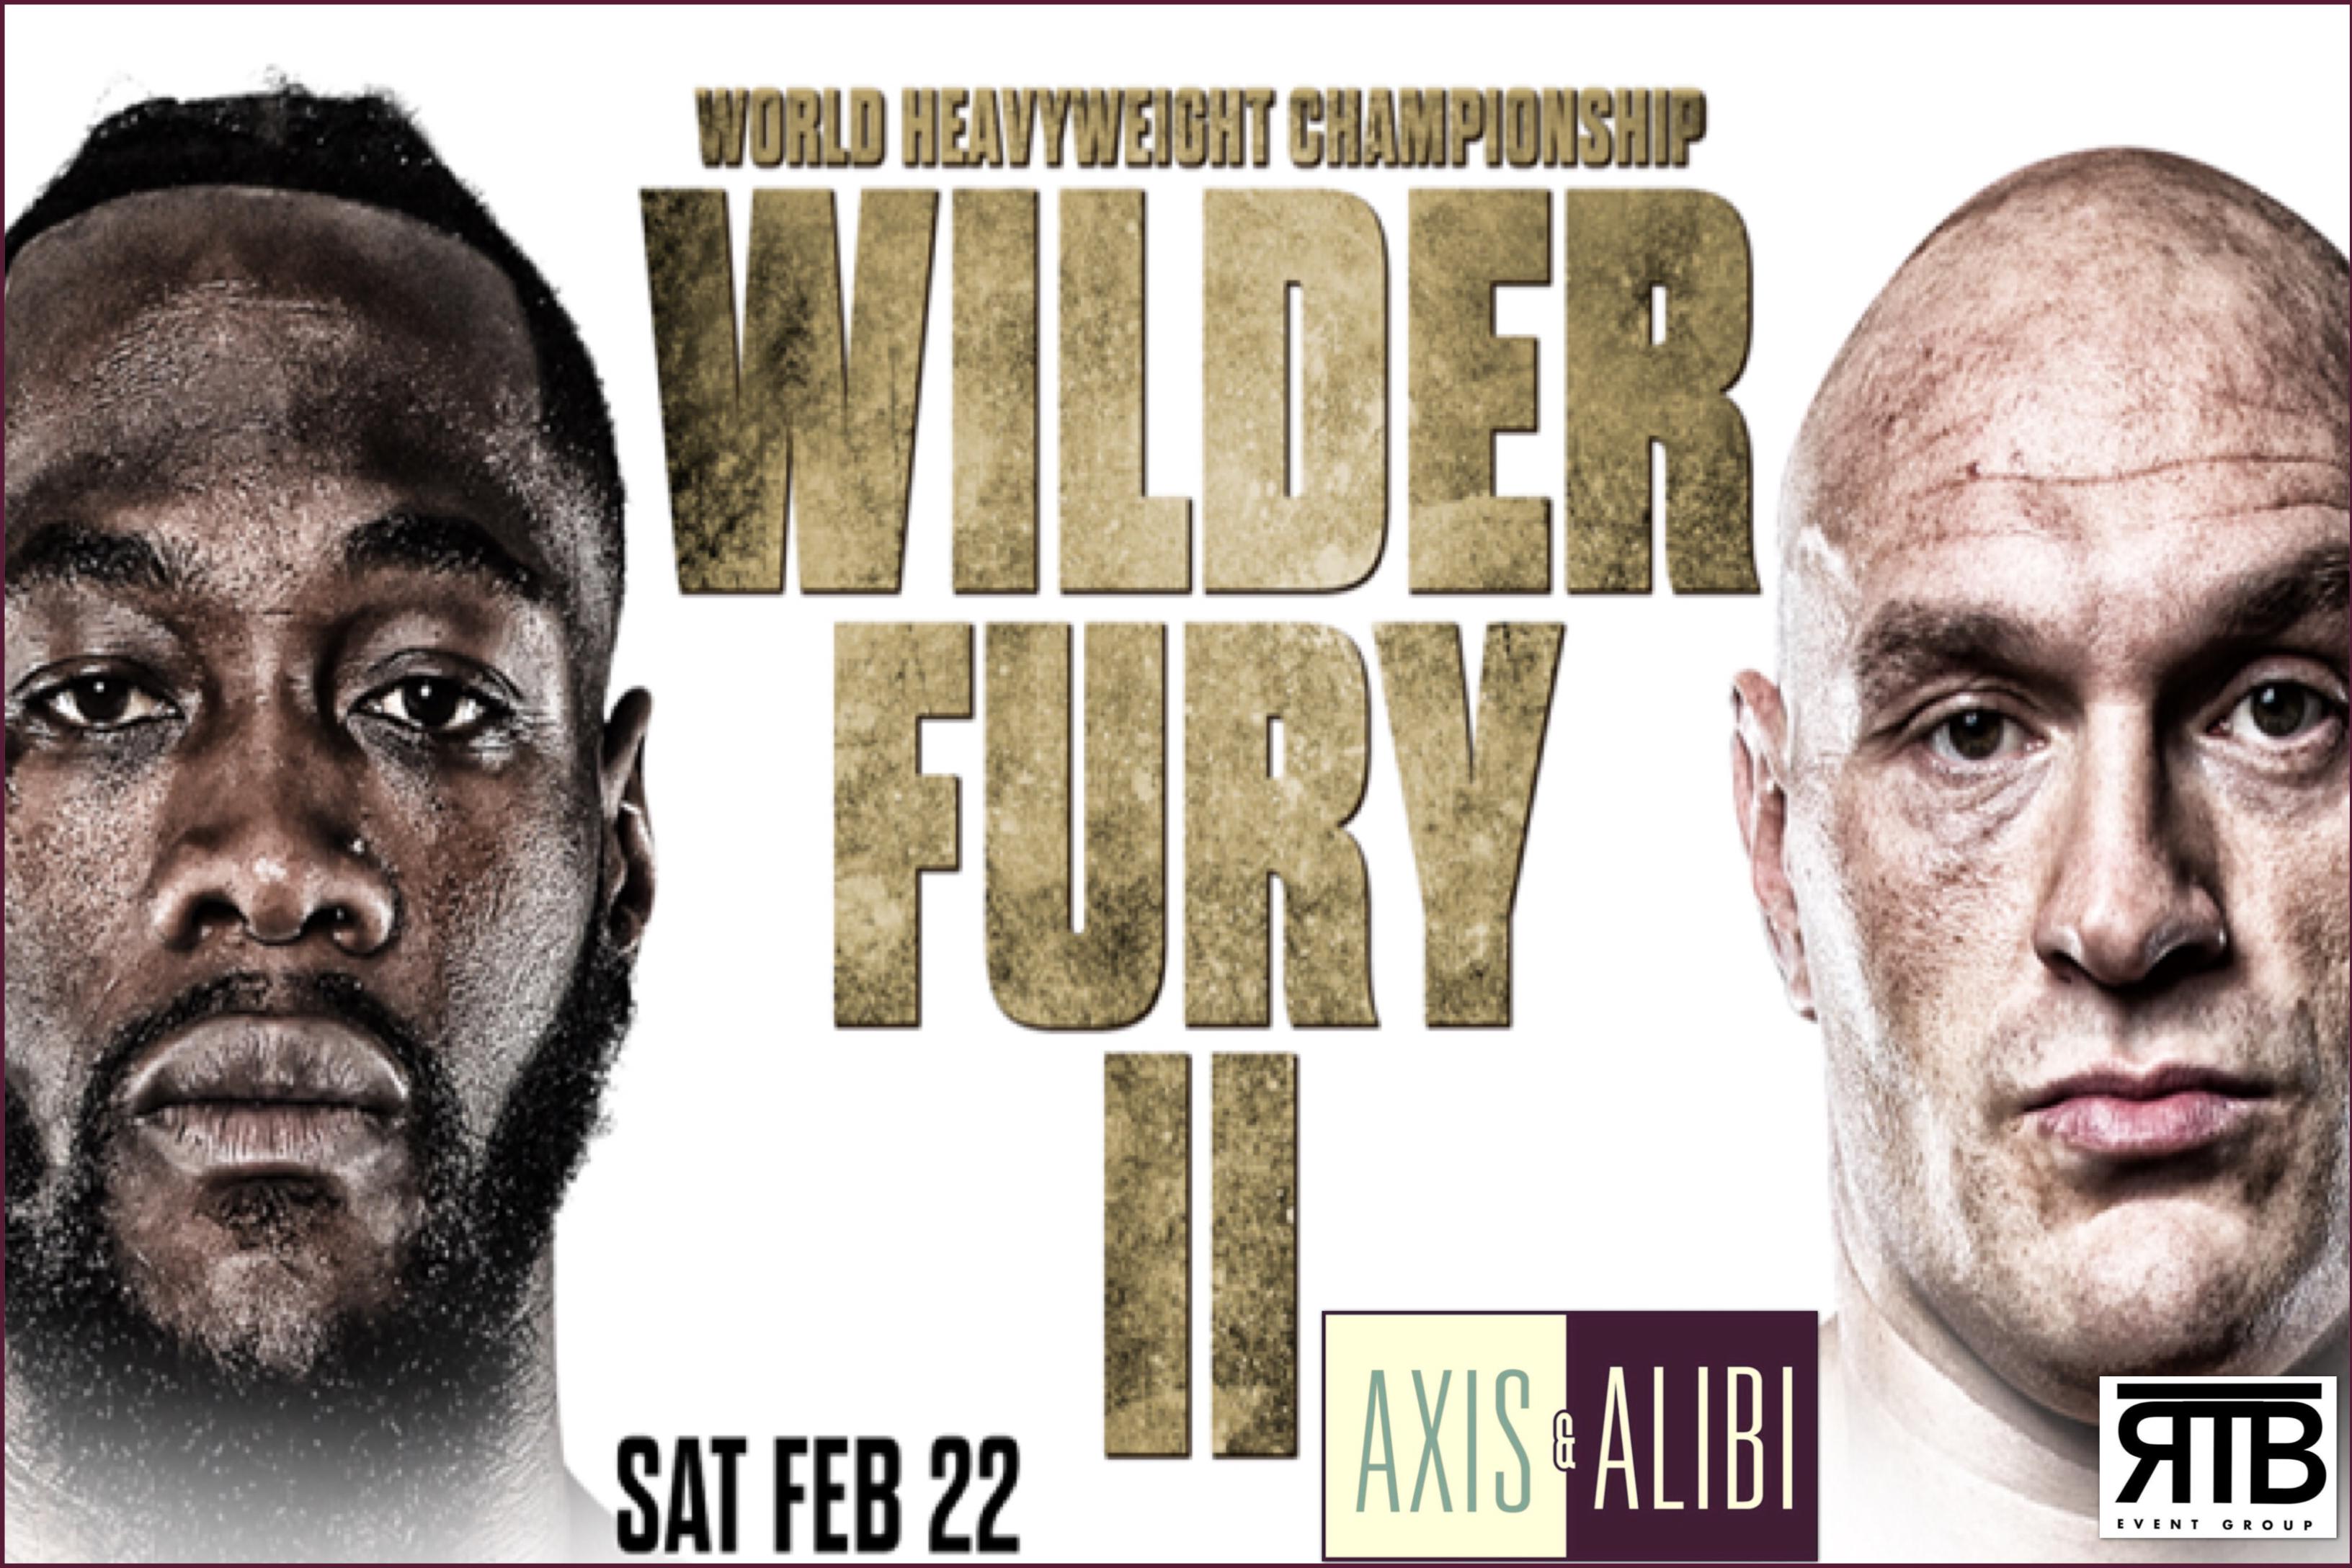 Axis & Alibi :: RTB Fight Night Wilder vs. Fury II